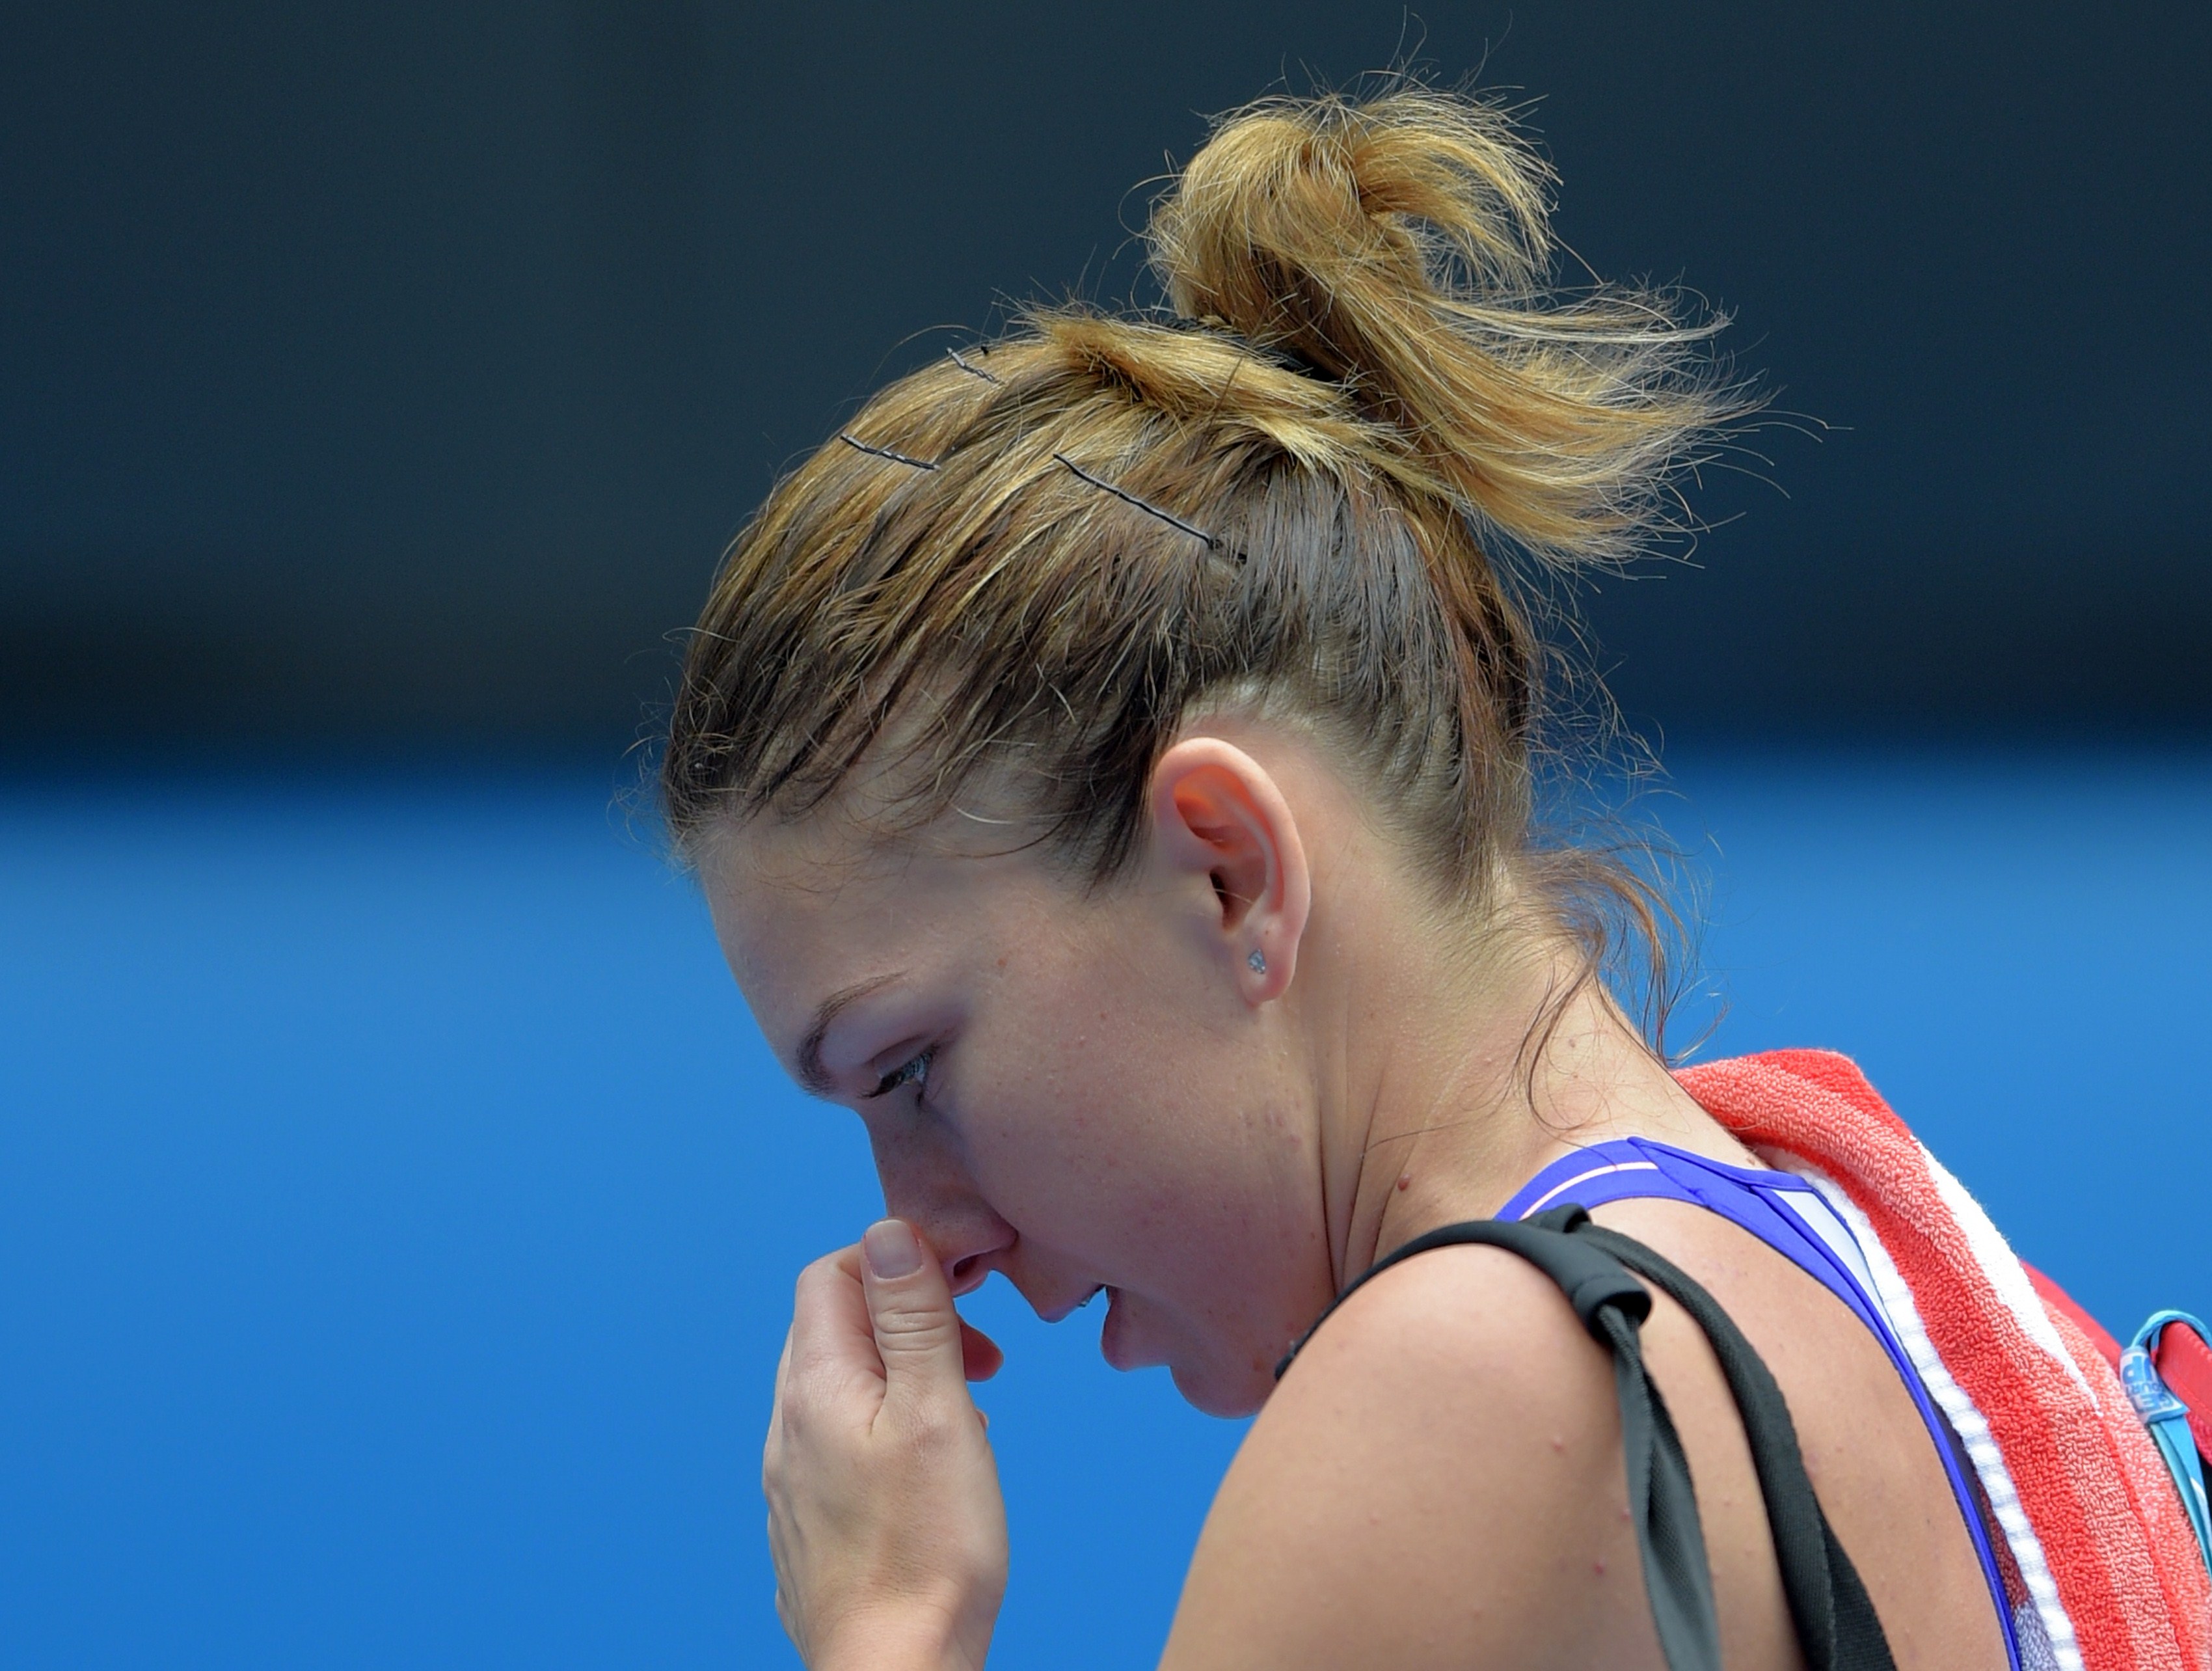 Simona Halep a fost eliminata de Ekaterina Makarova, scor 4-6, 0-6, in sferturile Australian Open. Reactia romancei